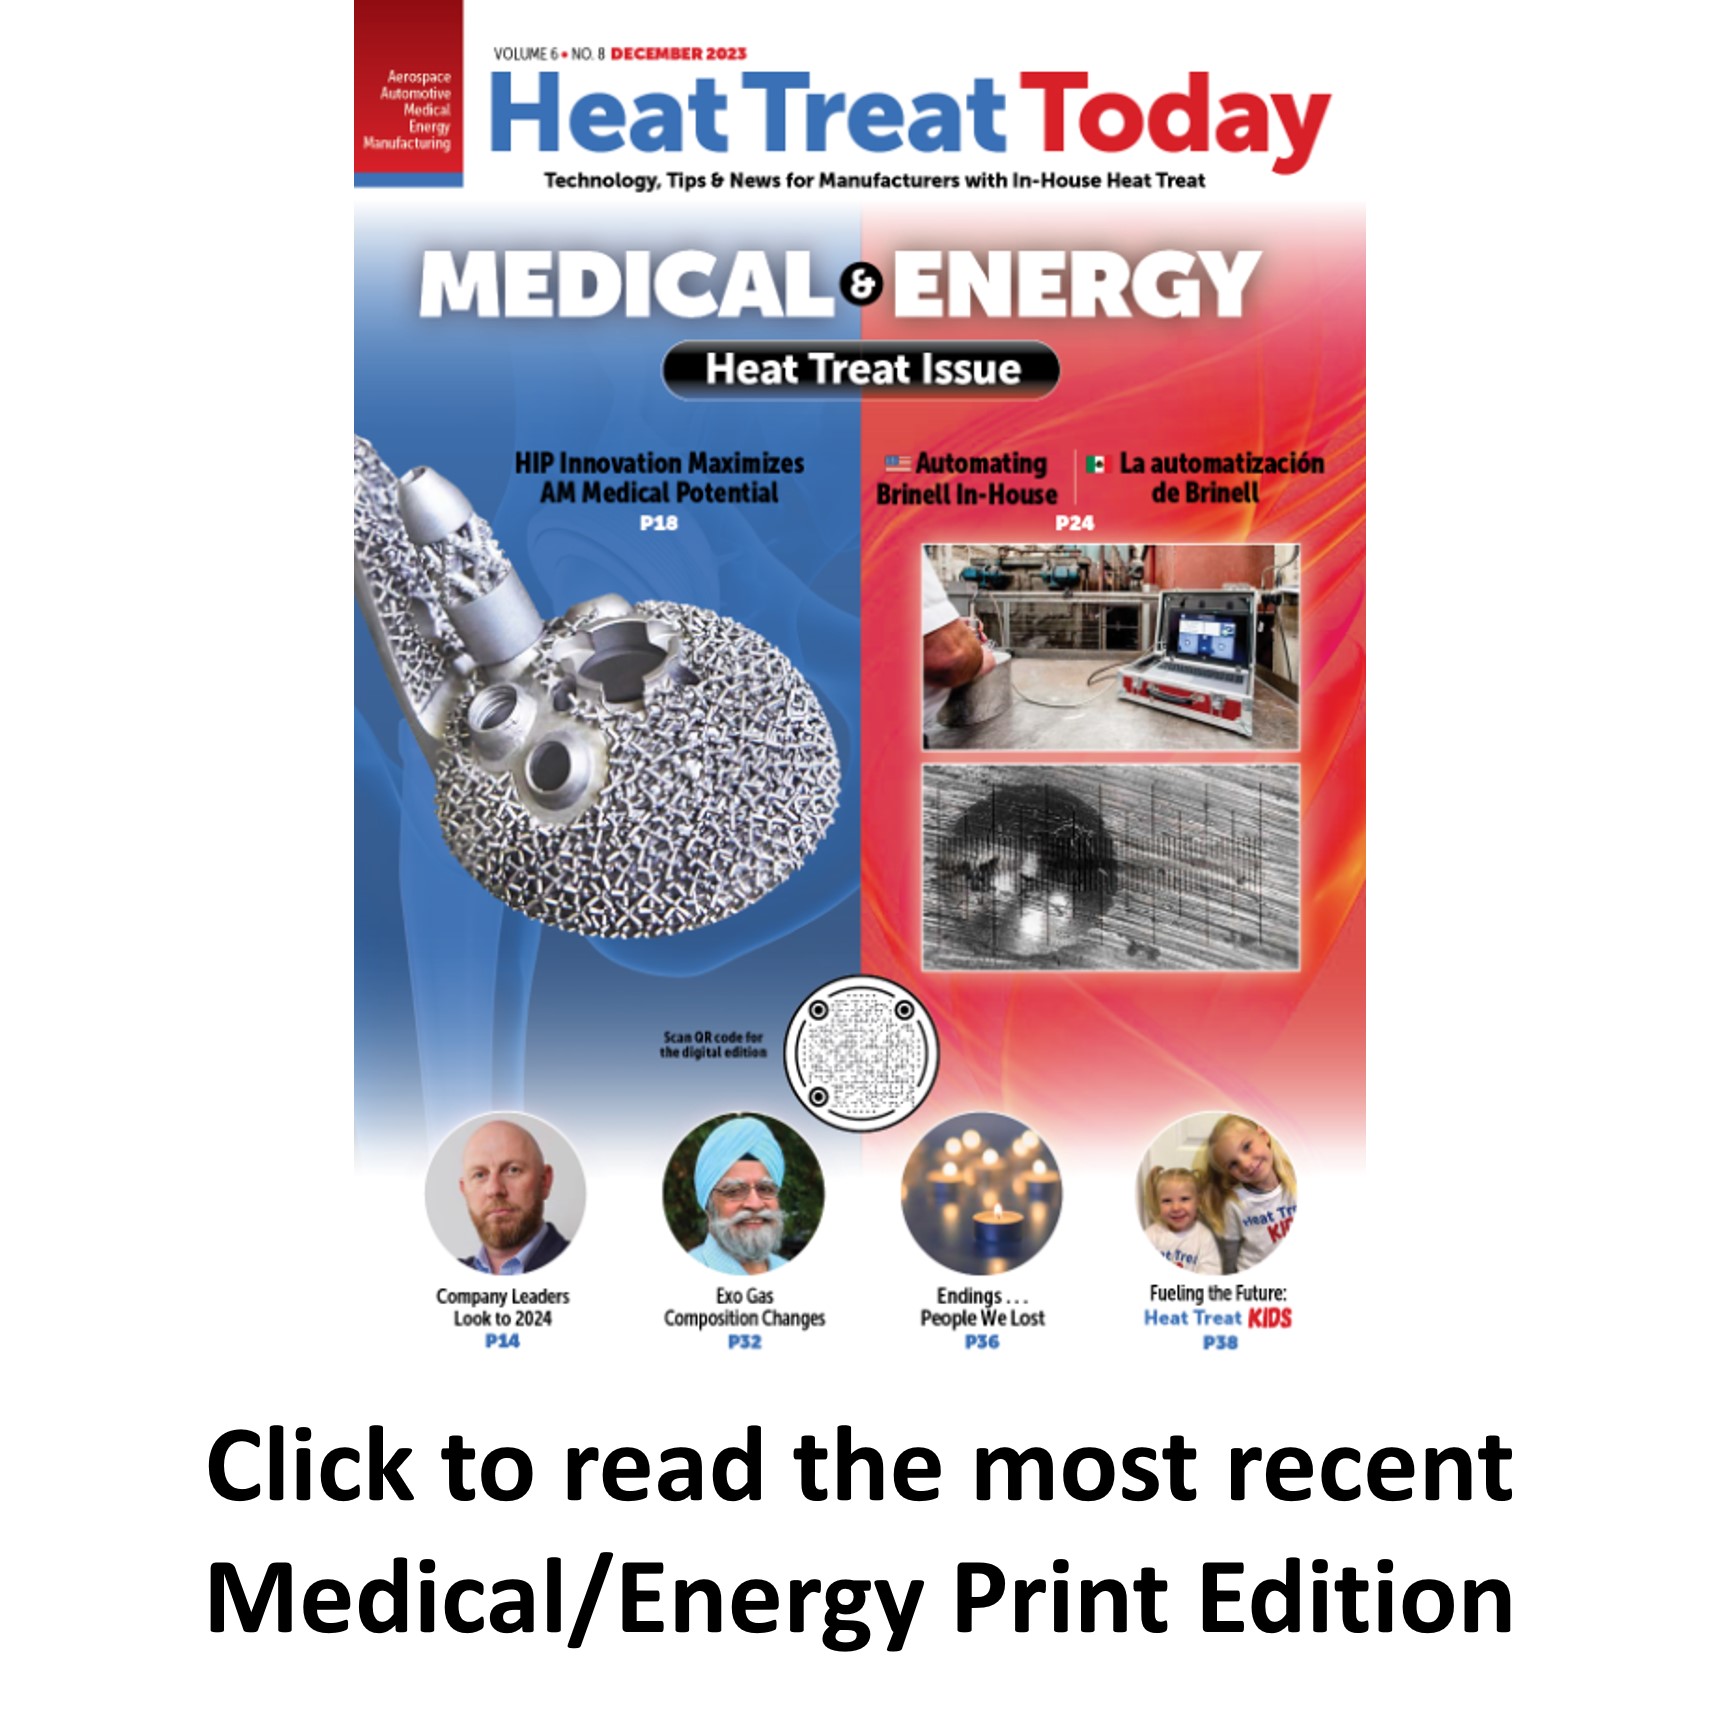 Medical/Energy print edition